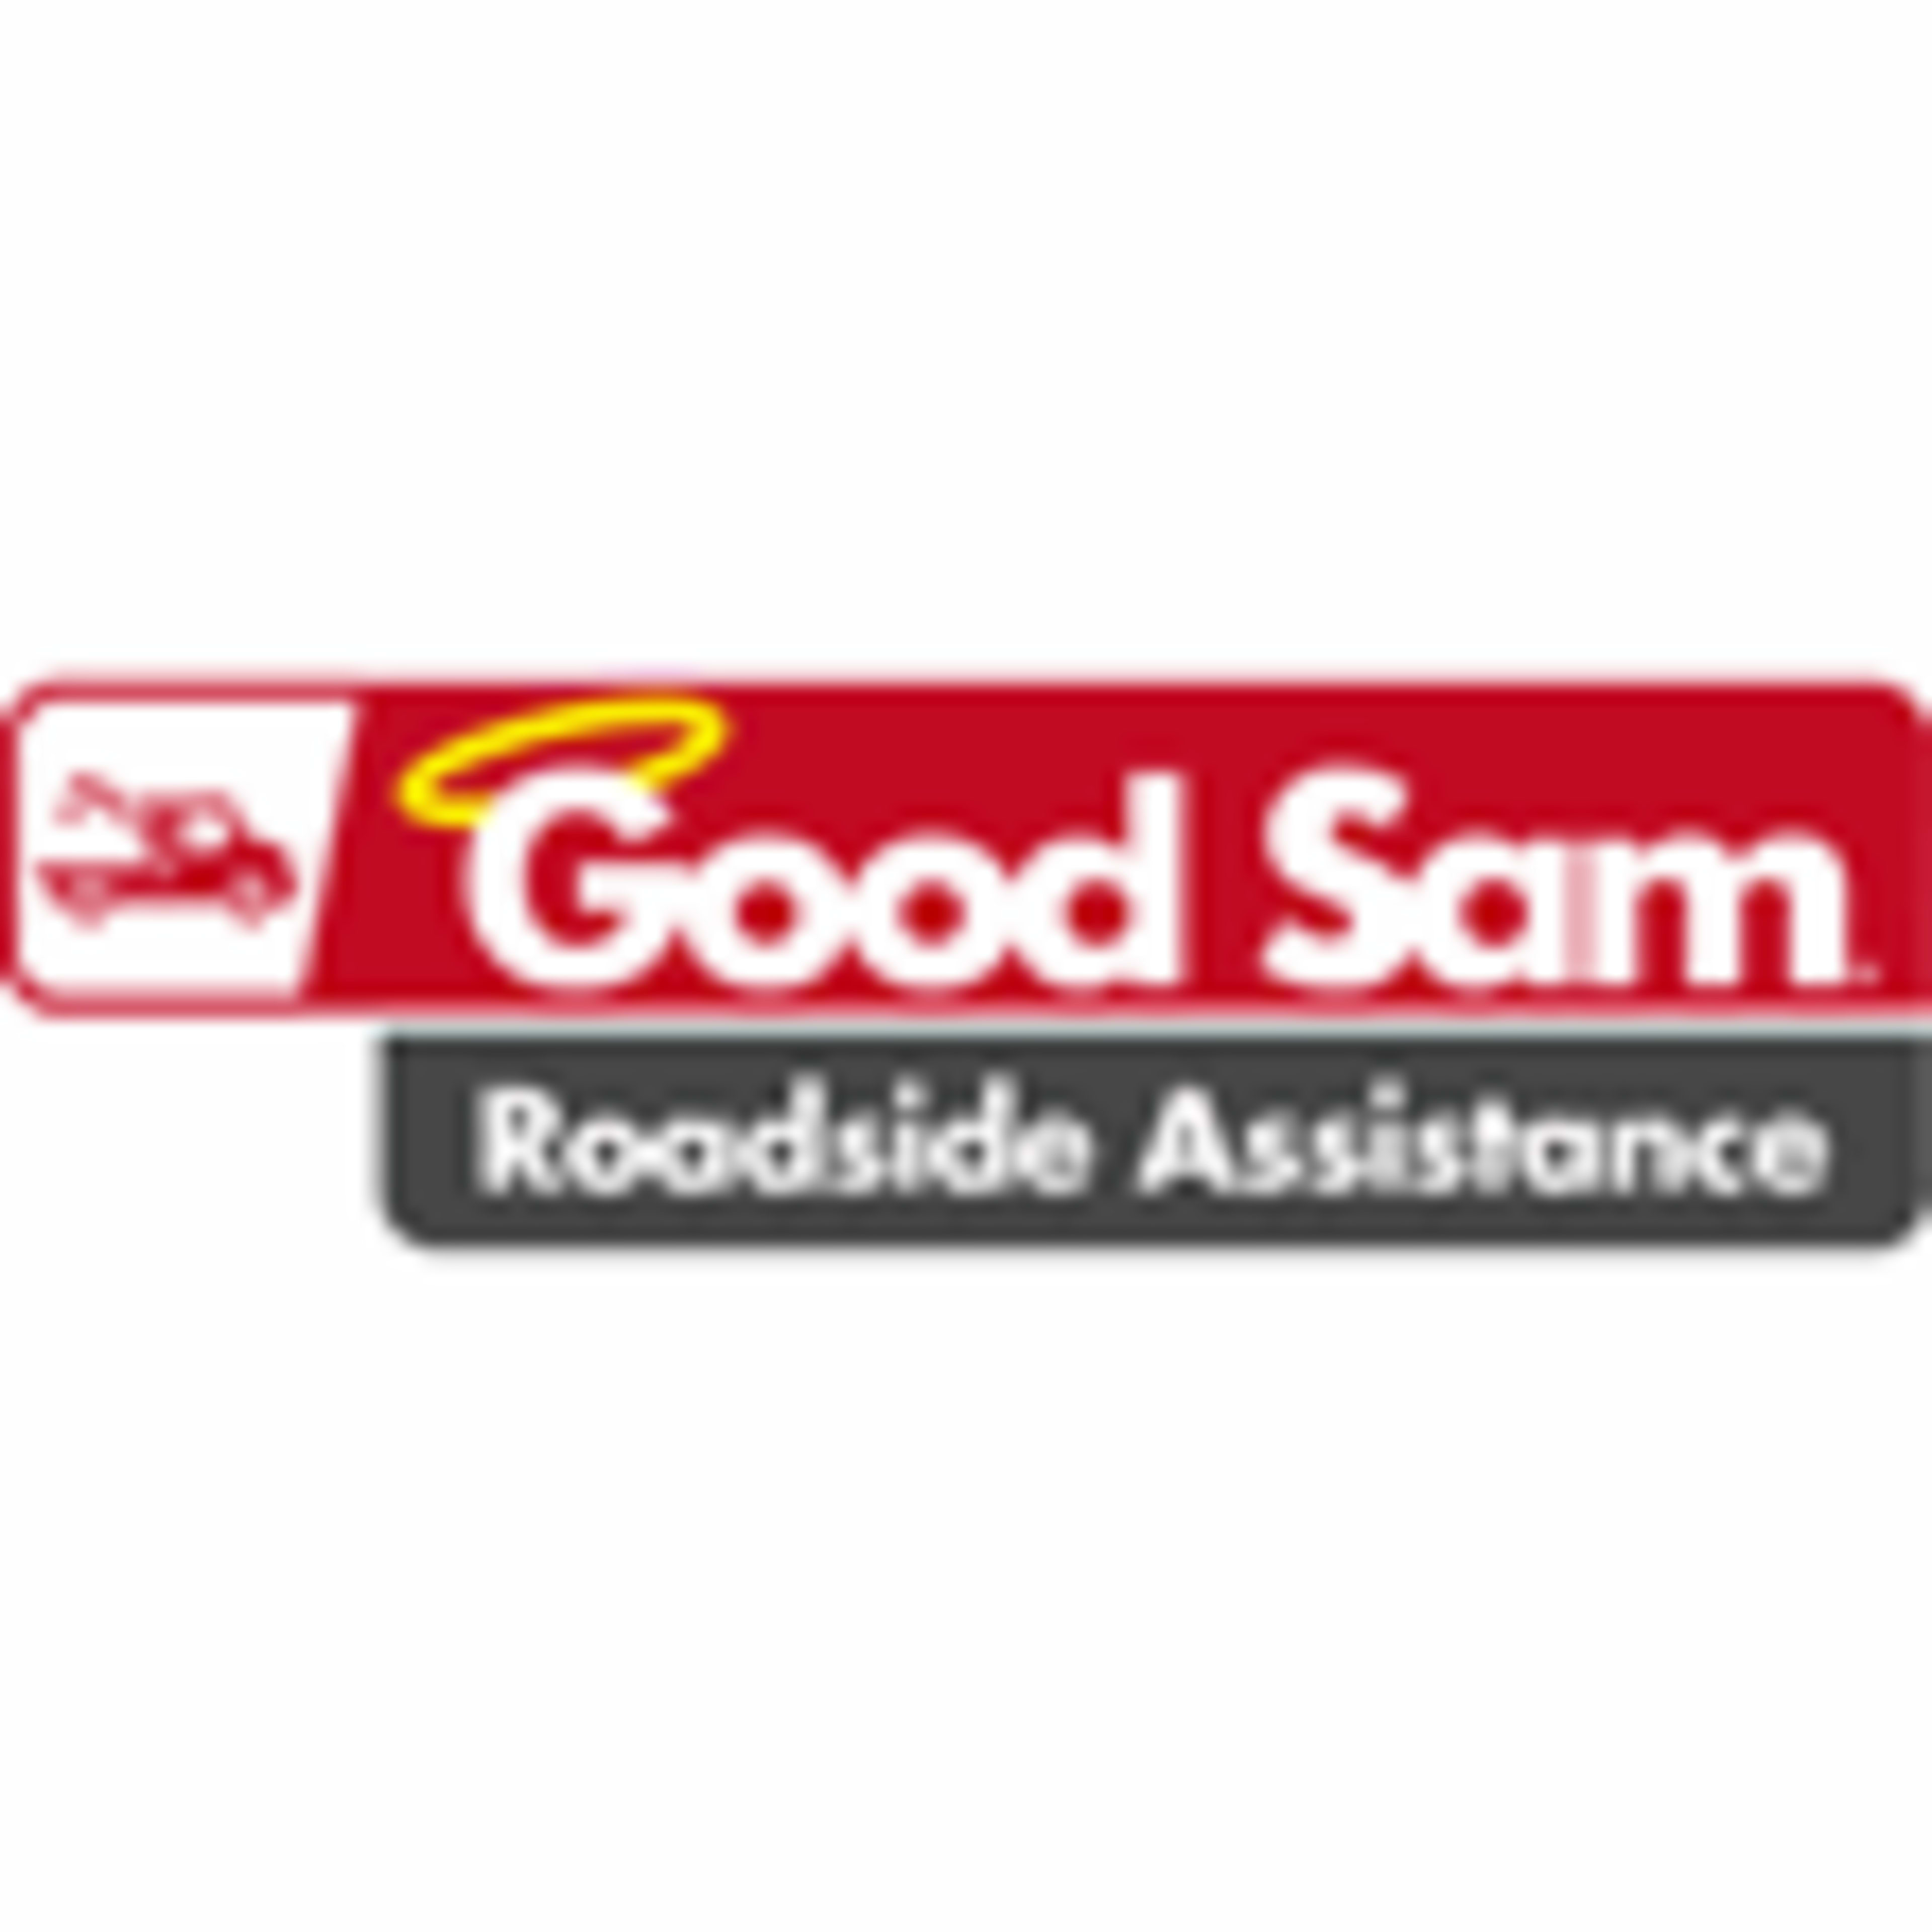 Good Sam Roadside Assistance Code